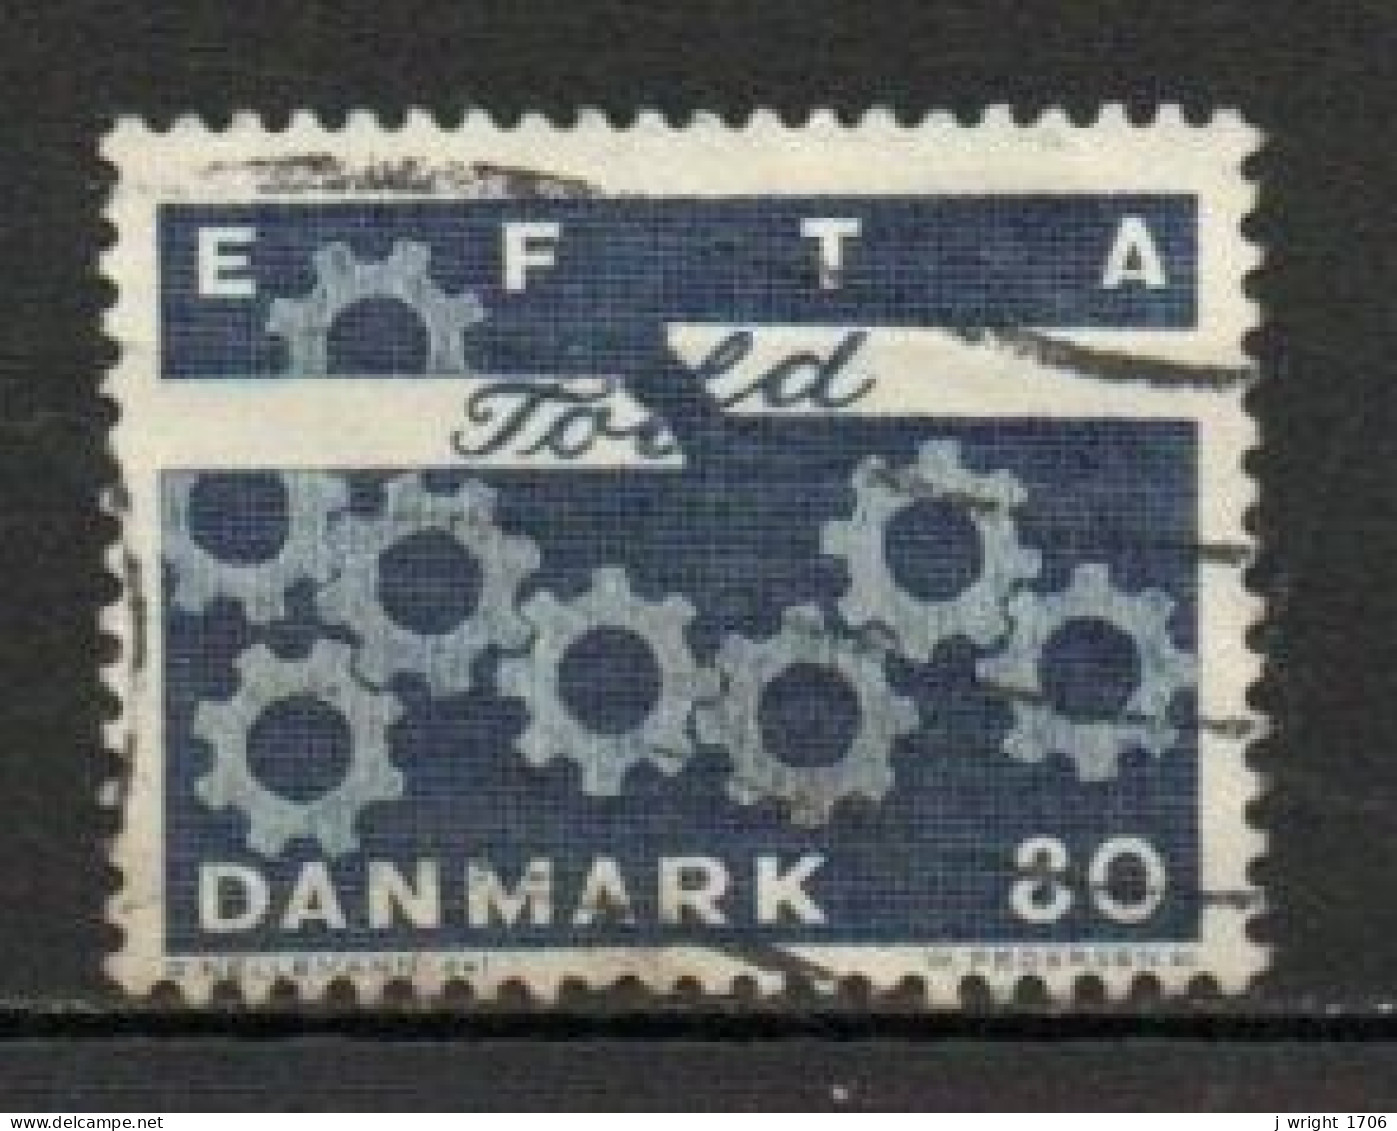 Denmark, 1967, EFTA, 80ø, USED - Usati